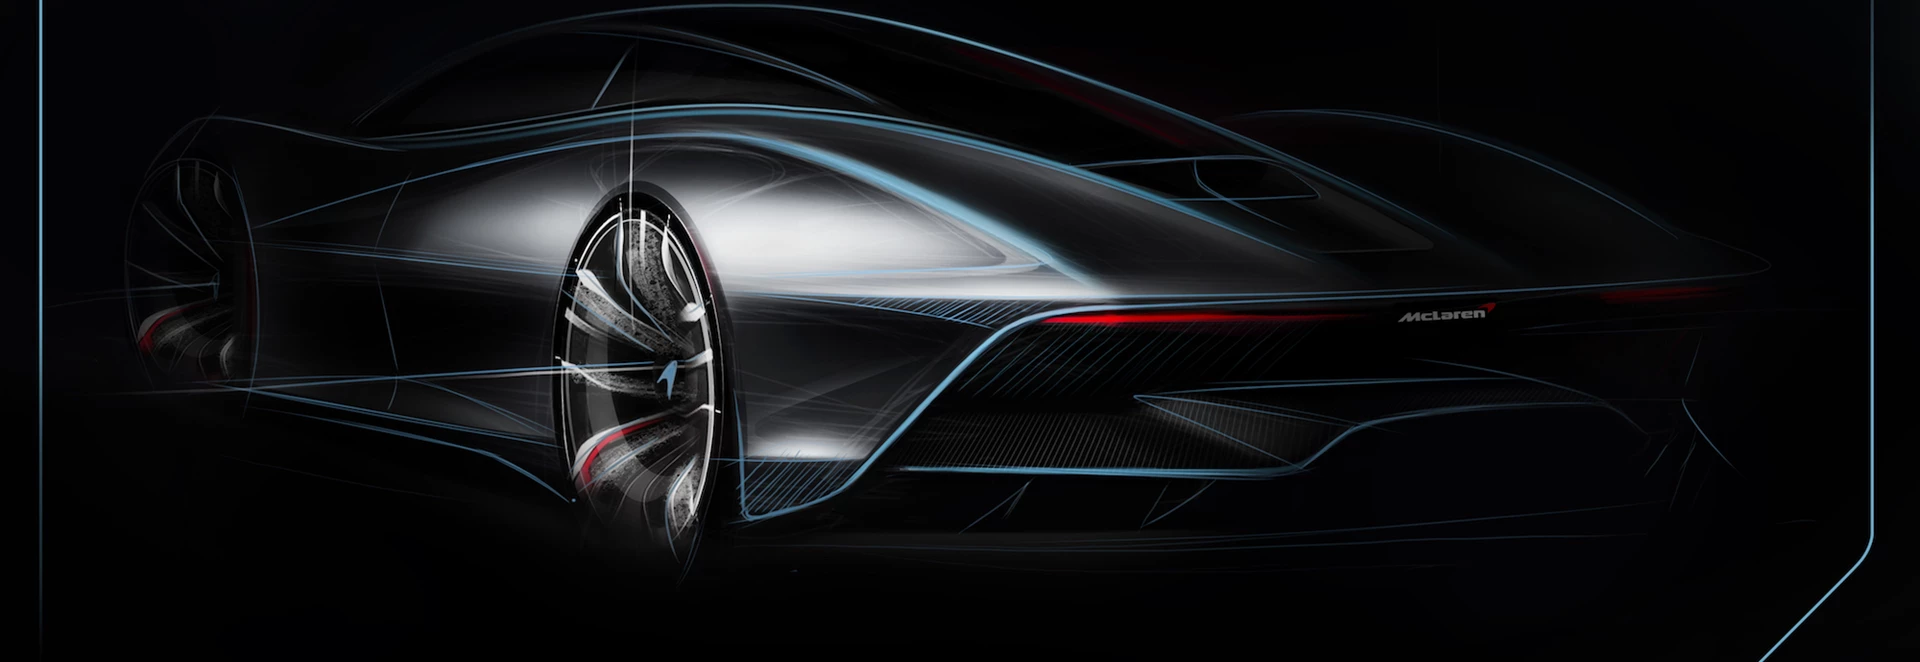 McLaren previews upcoming Hyper-GT